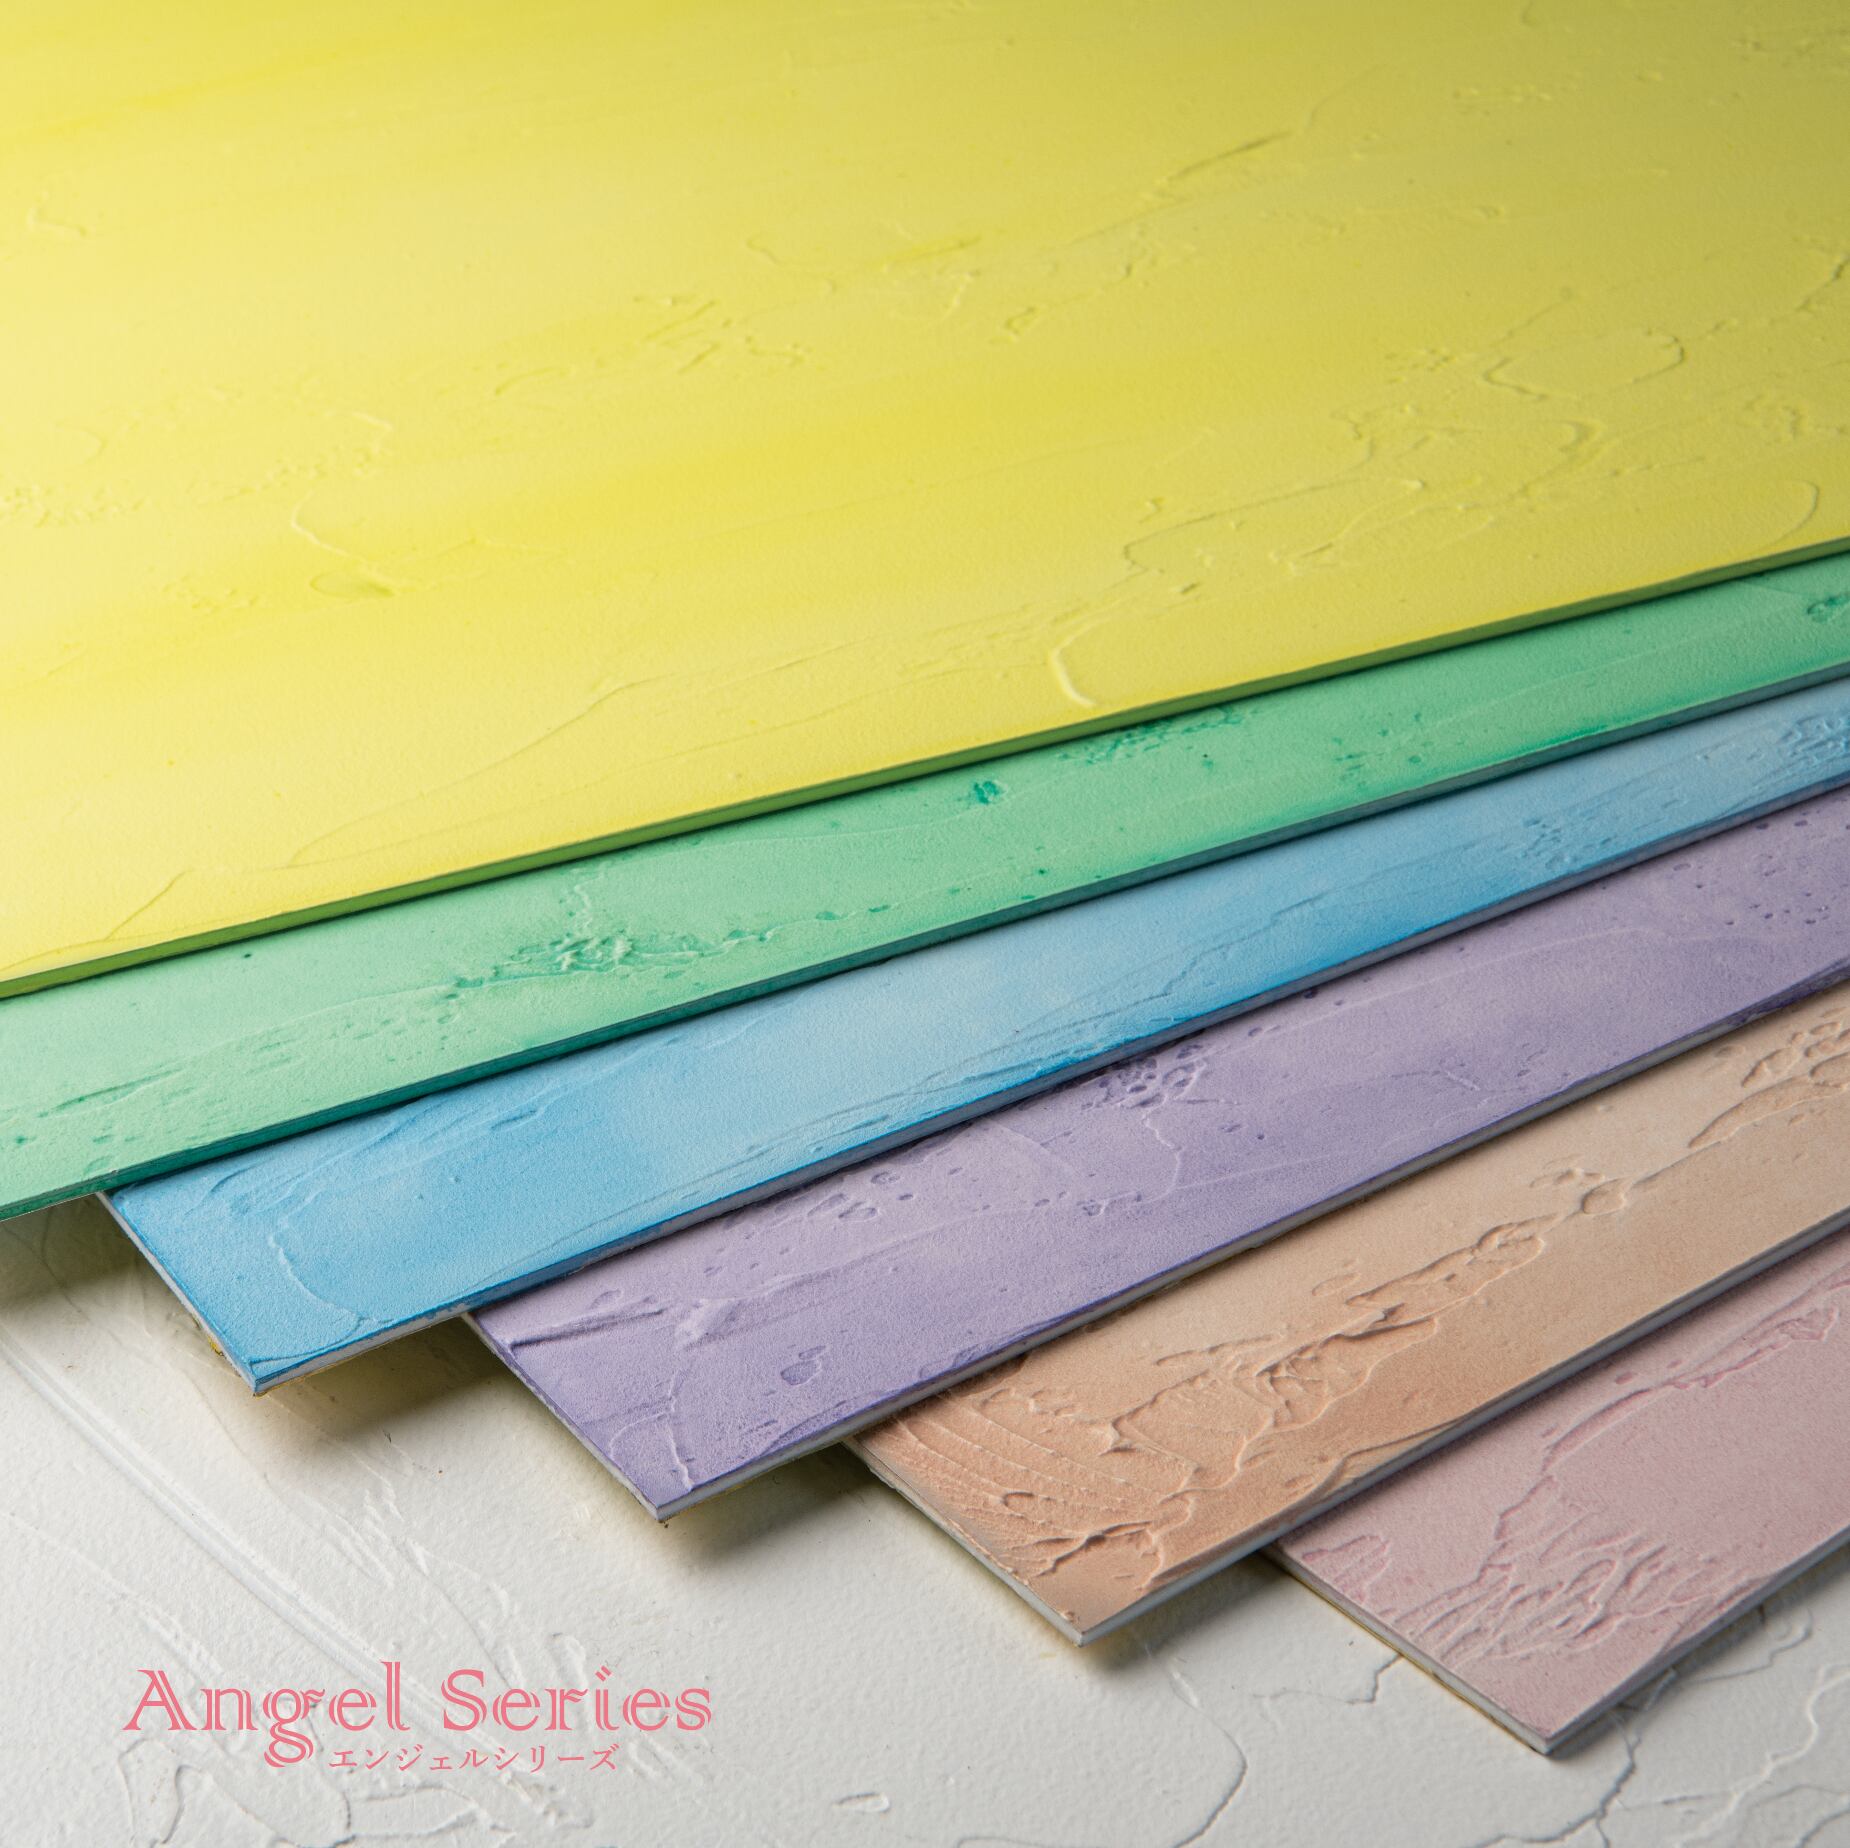 BAEL PHOTO BOARD HALF Pastel color series〈アズライールパステルパープル〉